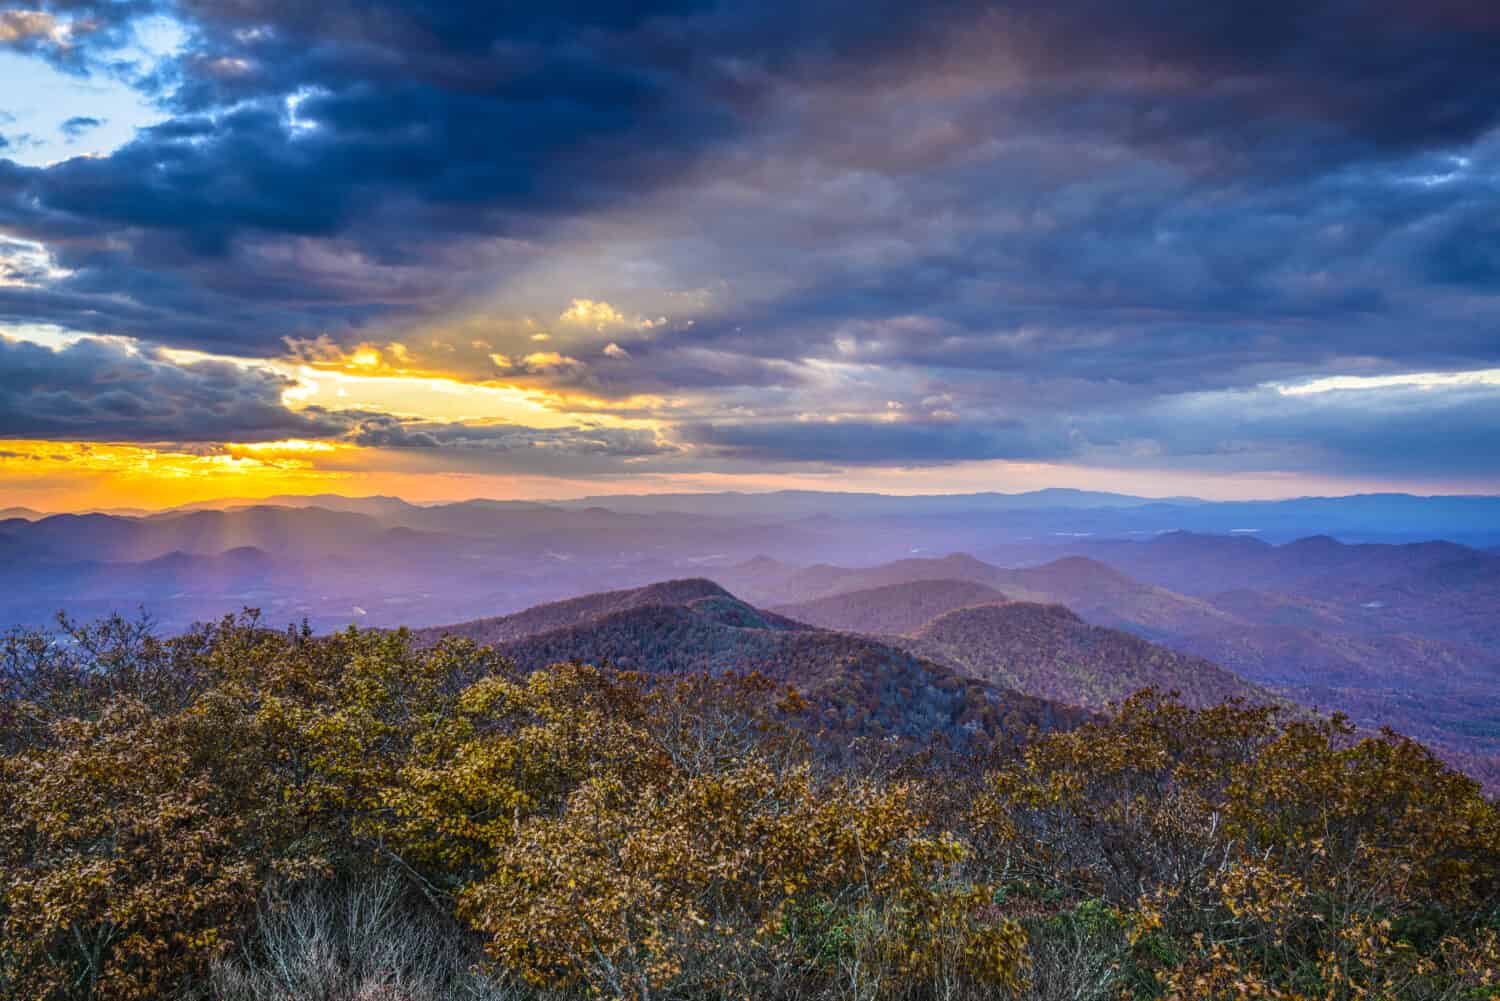 Blue Ridge Mountains in North Georgia, USA in the autumn season at sunset.